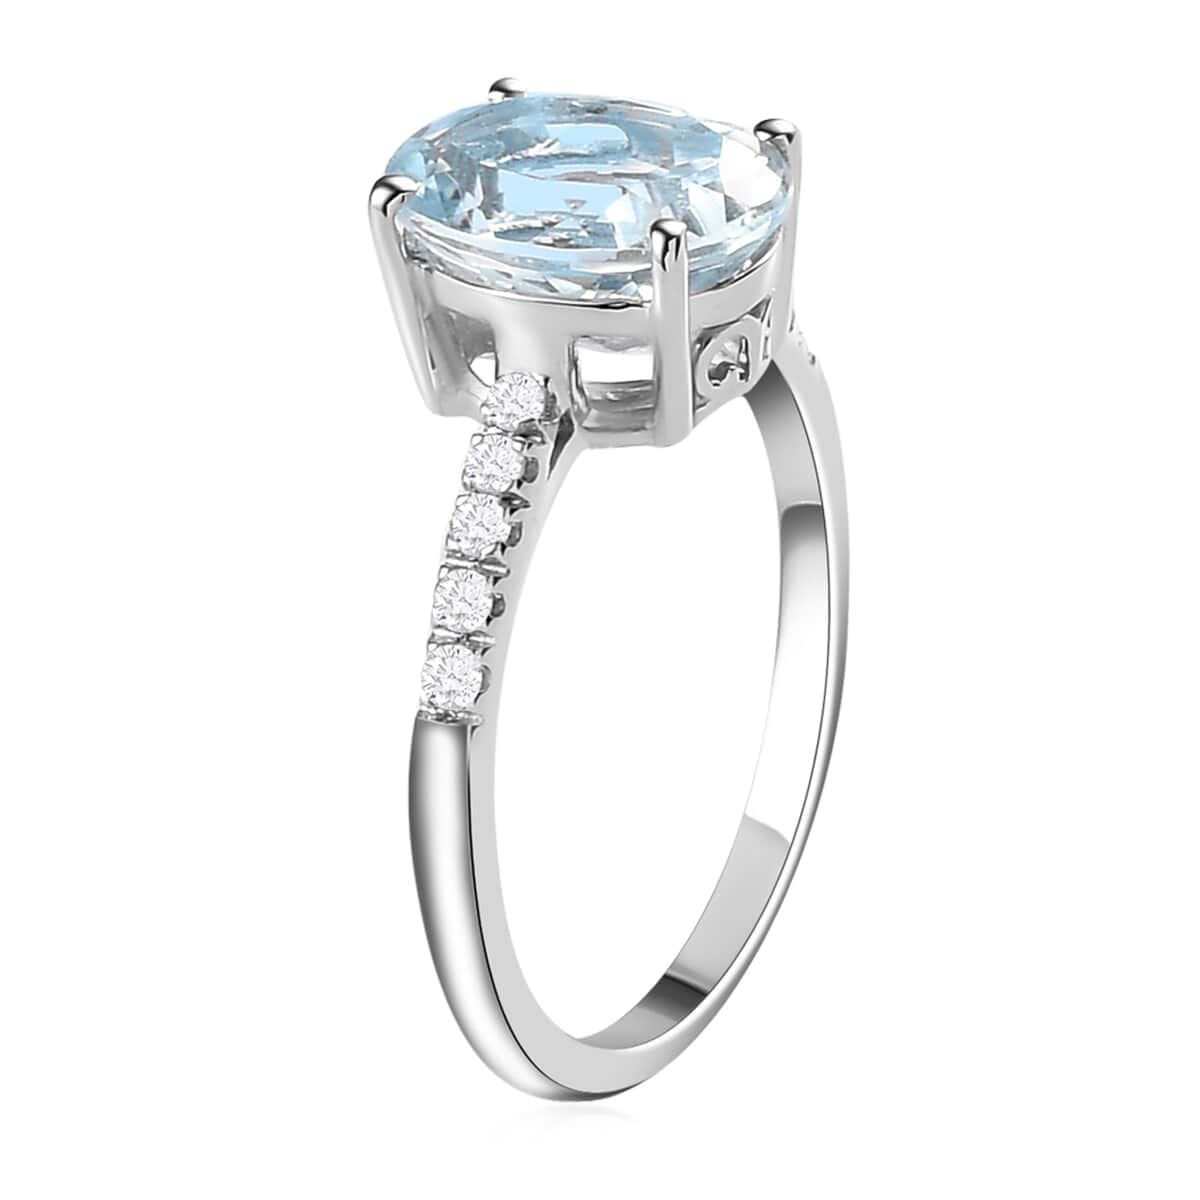 Premium Mangoro Aquamarine, Diamond (0.15 cts) Ring in Platinum Over Sterling Silver (Size 10.0) 2.40 ctw image number 3